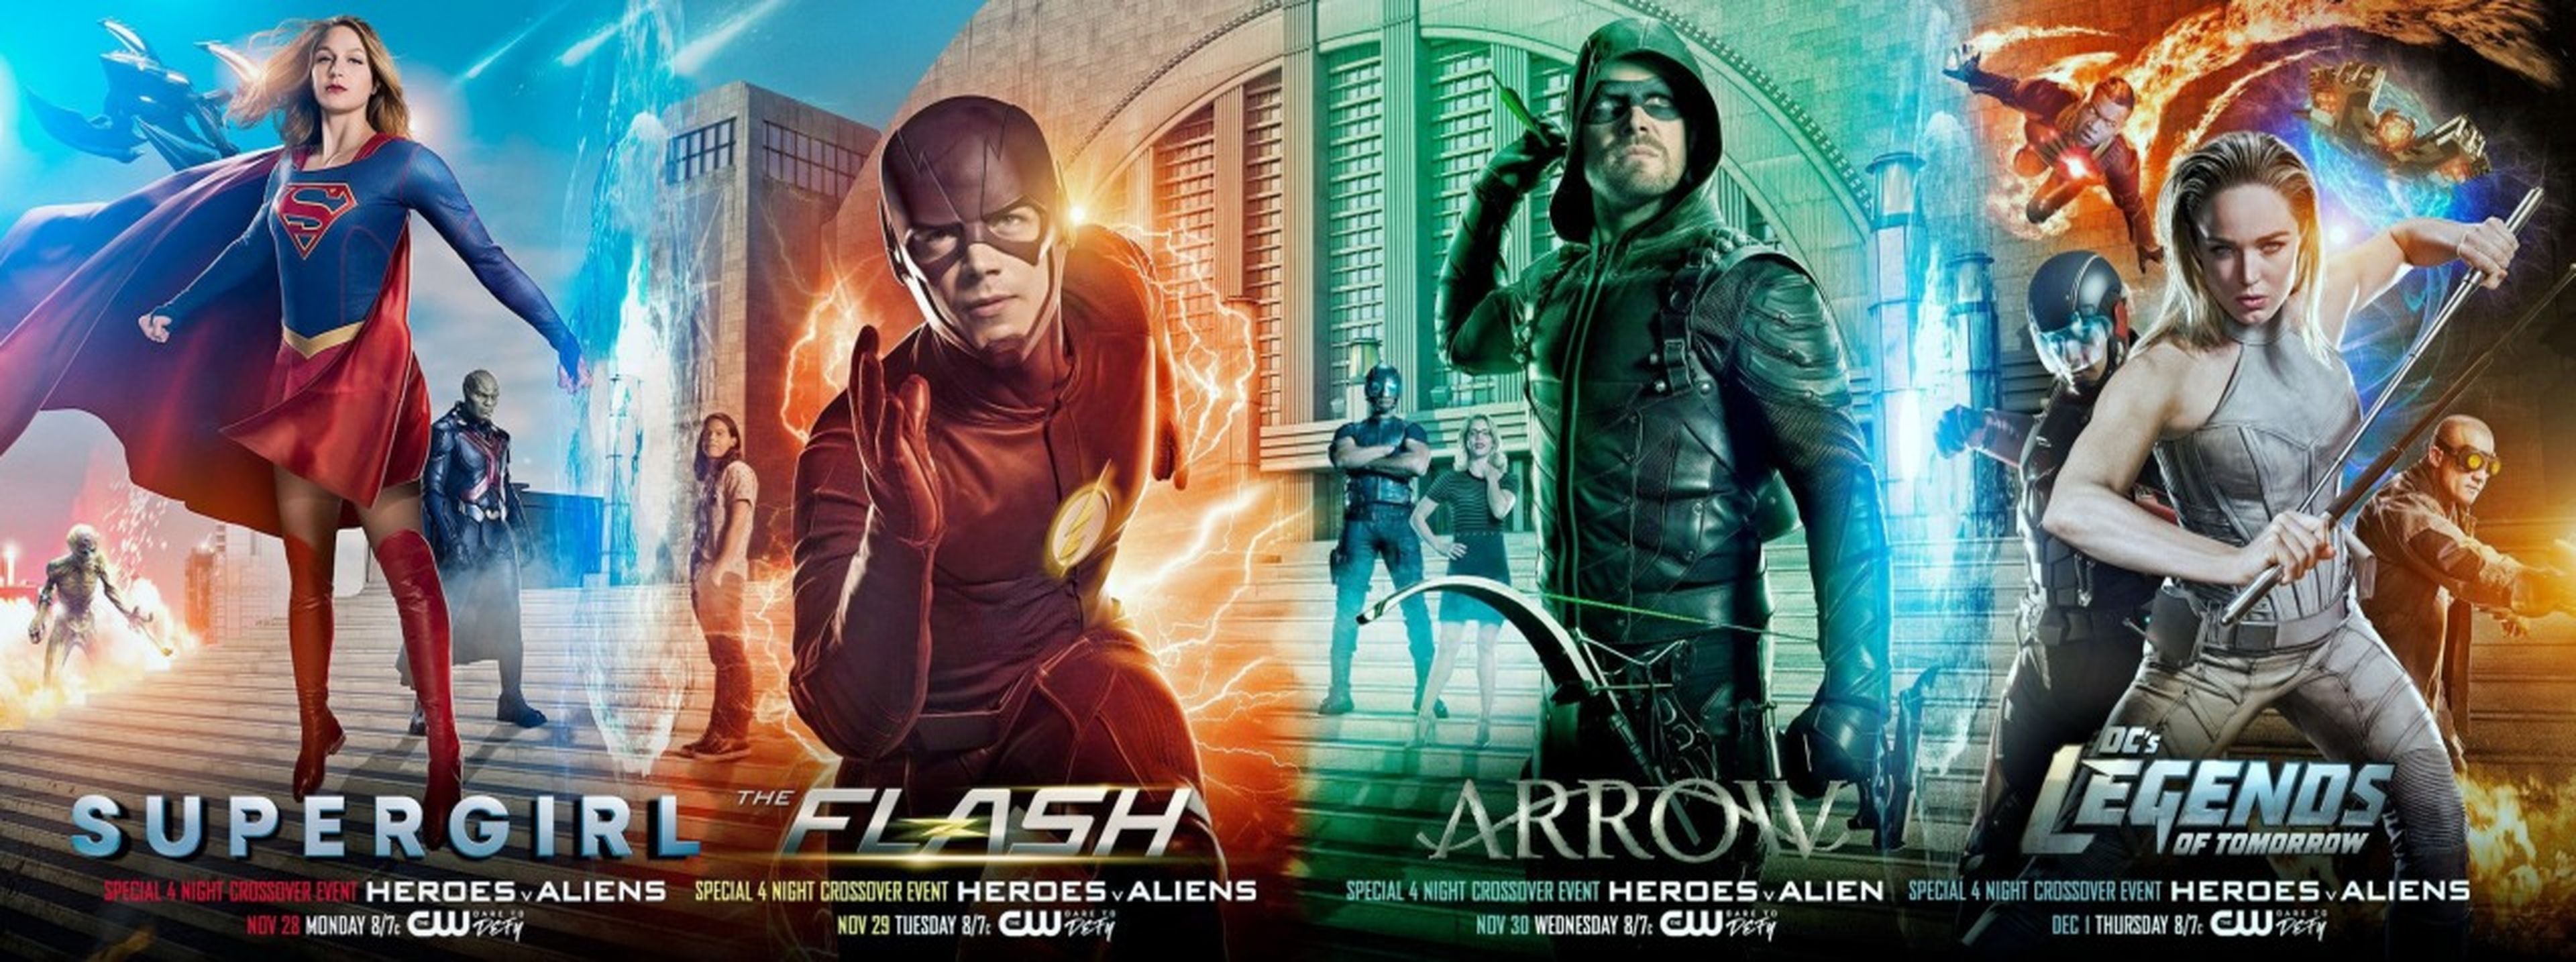 mega-crossover DC: Supergirl, The Flash, Arrow y Legends of Tomorrow